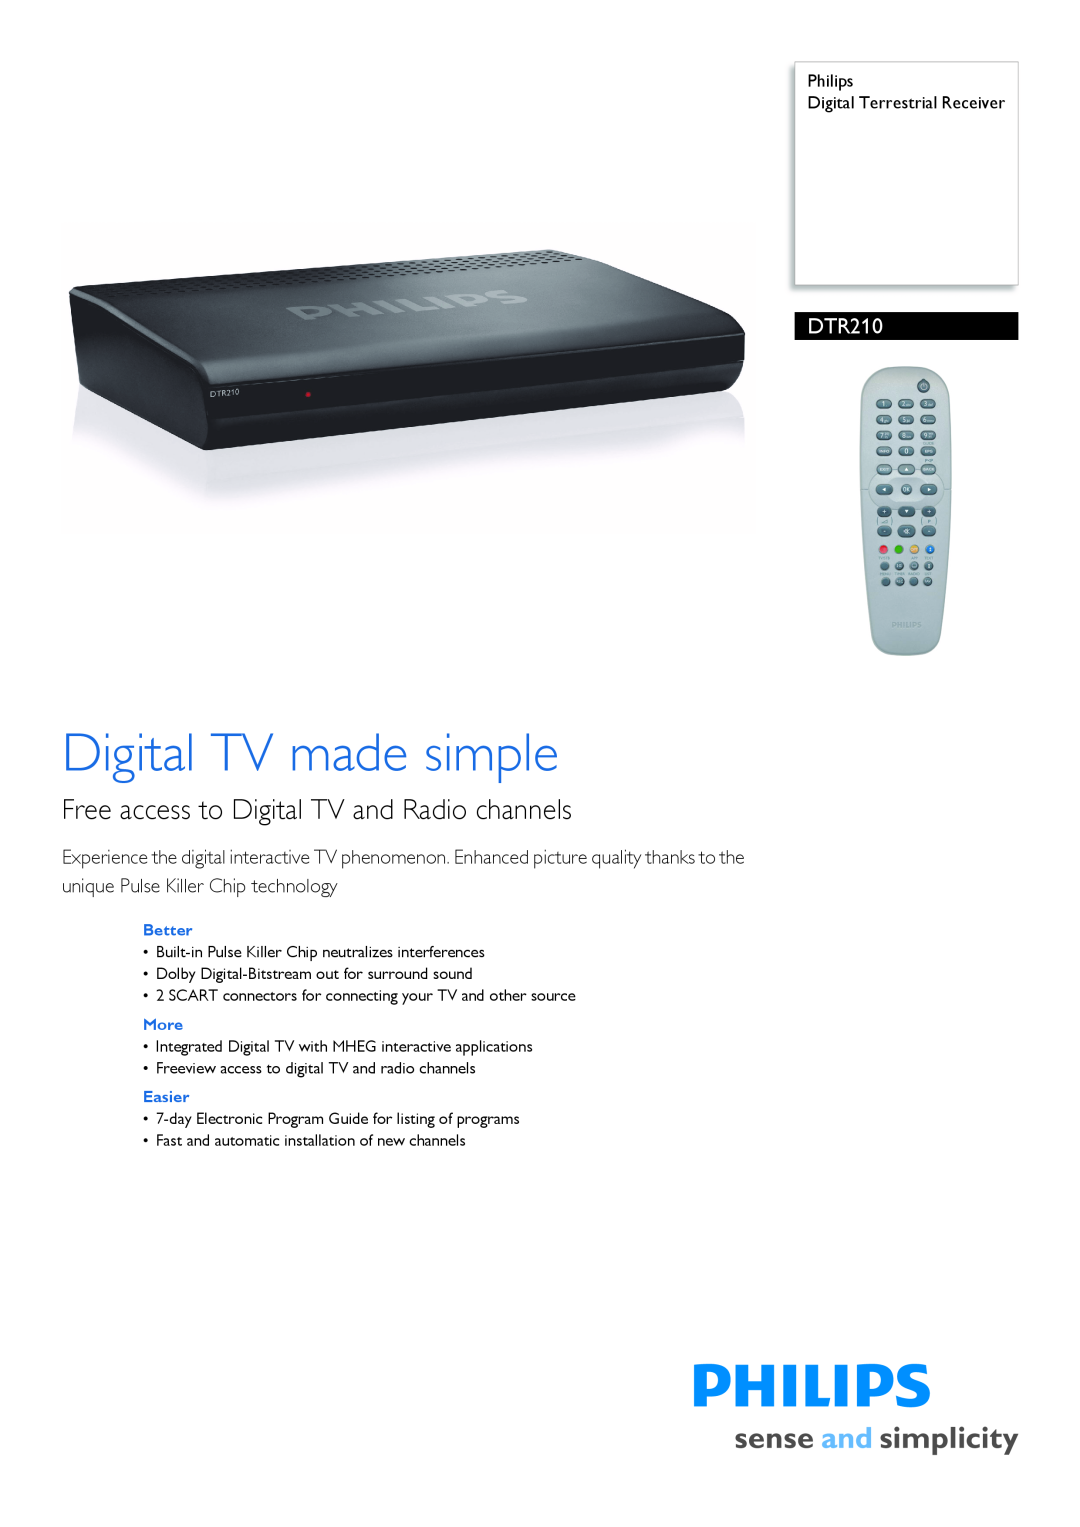 Philips DTR210 manual Philips Digital Terrestrial Receiver, Better, More, Easier, Digital TV made simple 